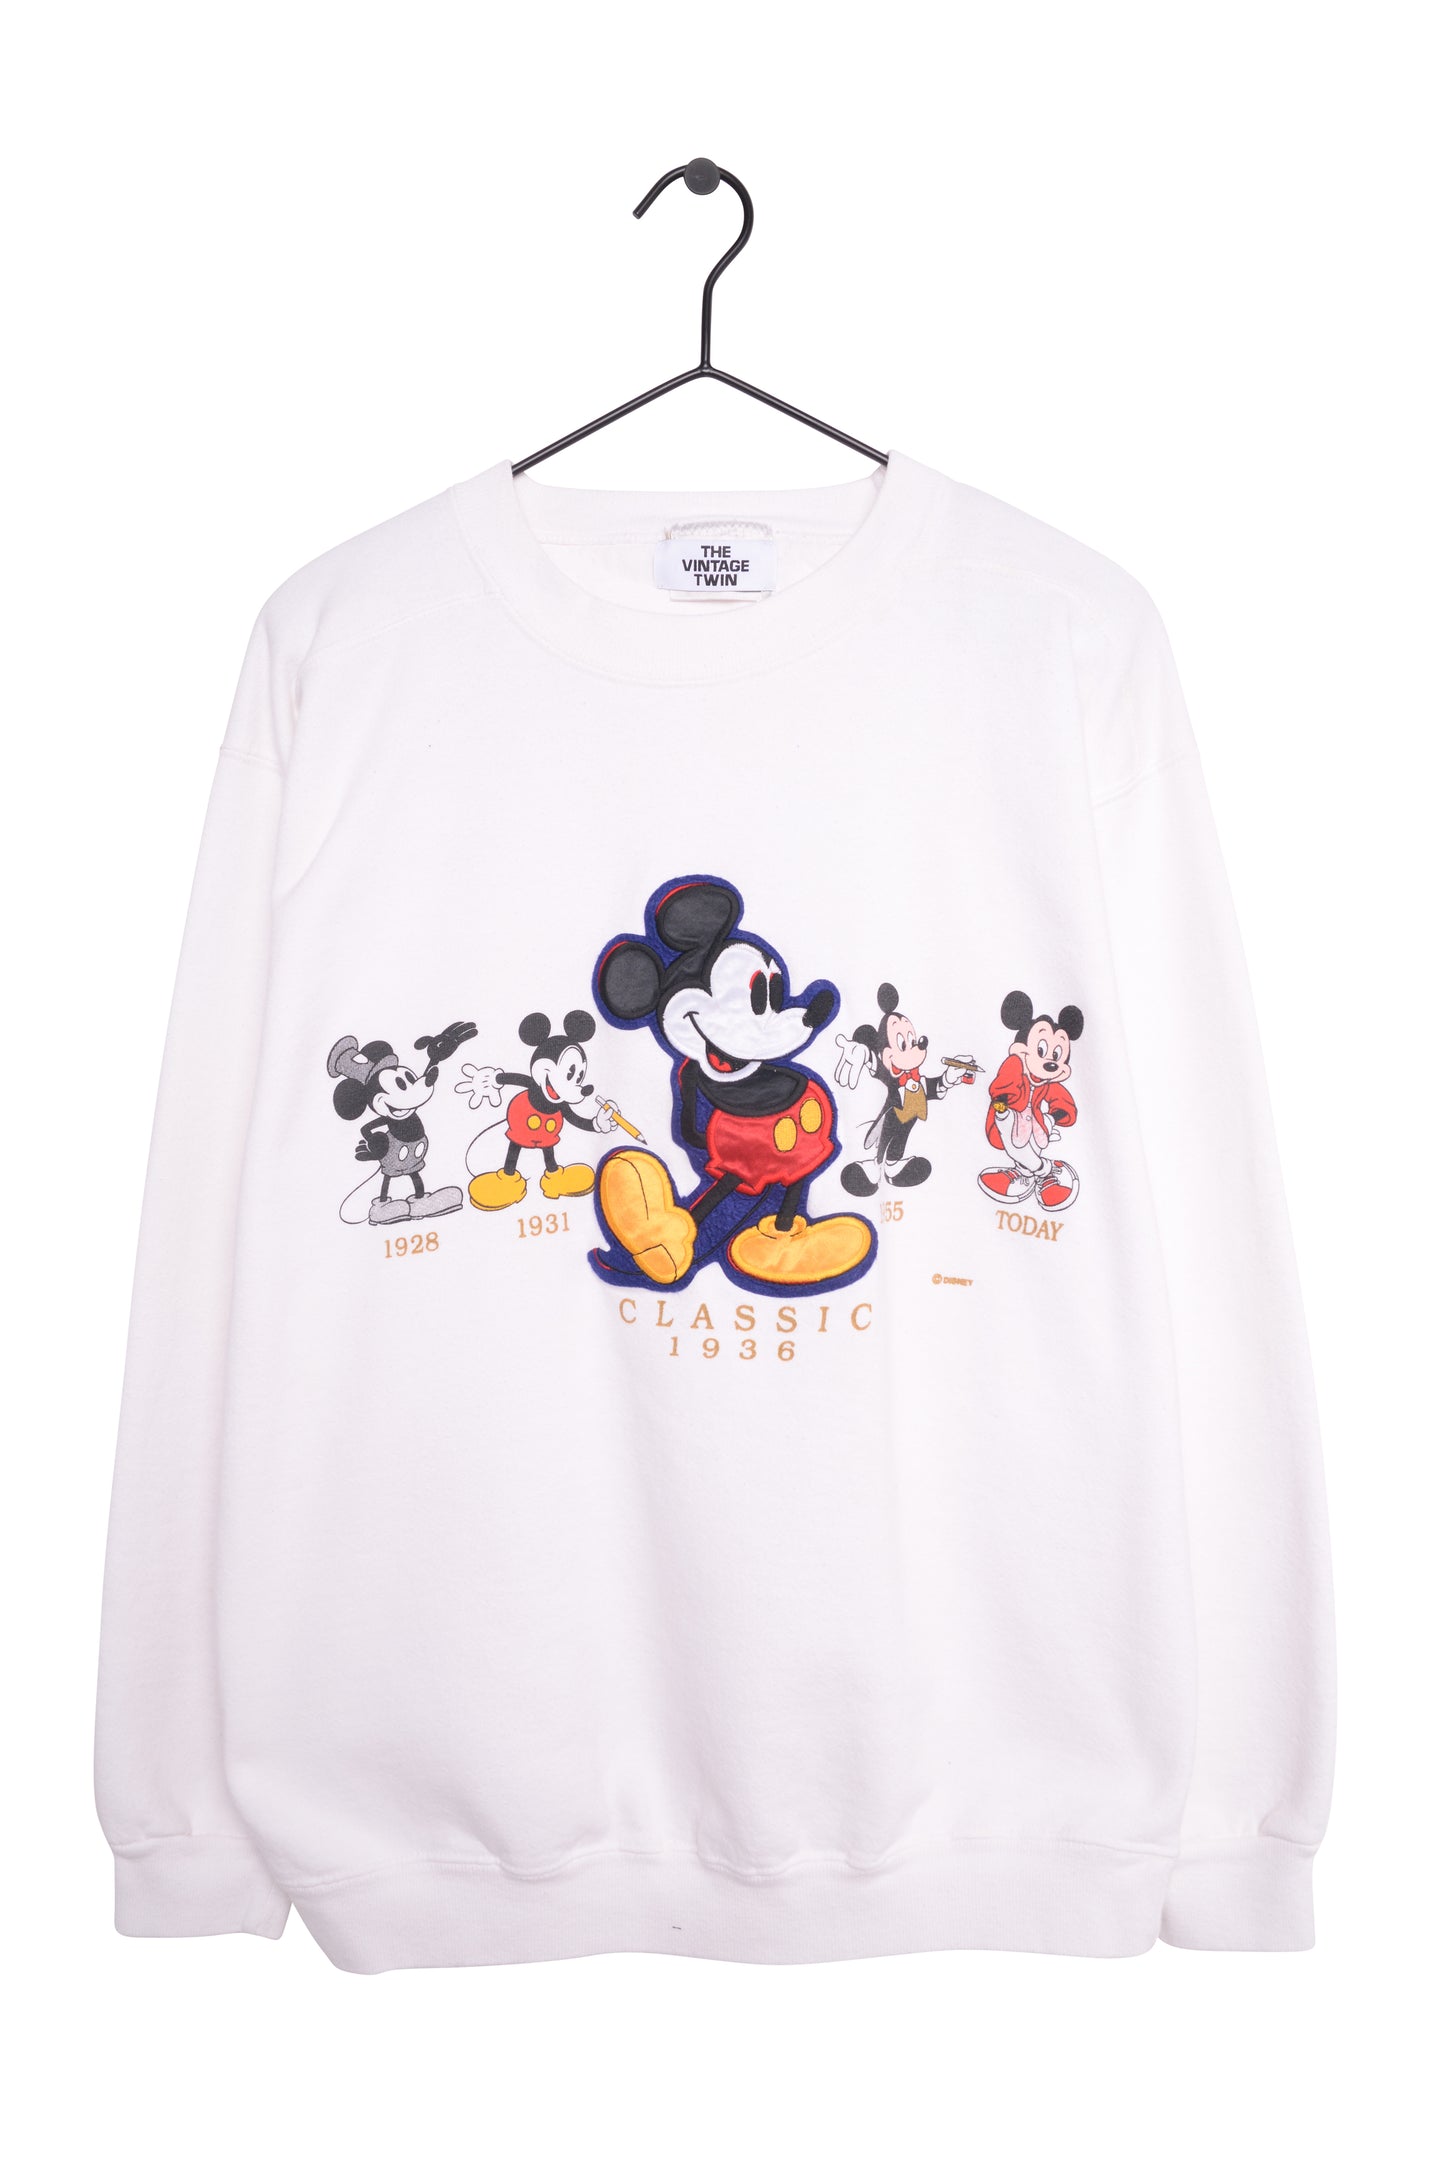 1990s Mickey Mouse Sweatshirt USA